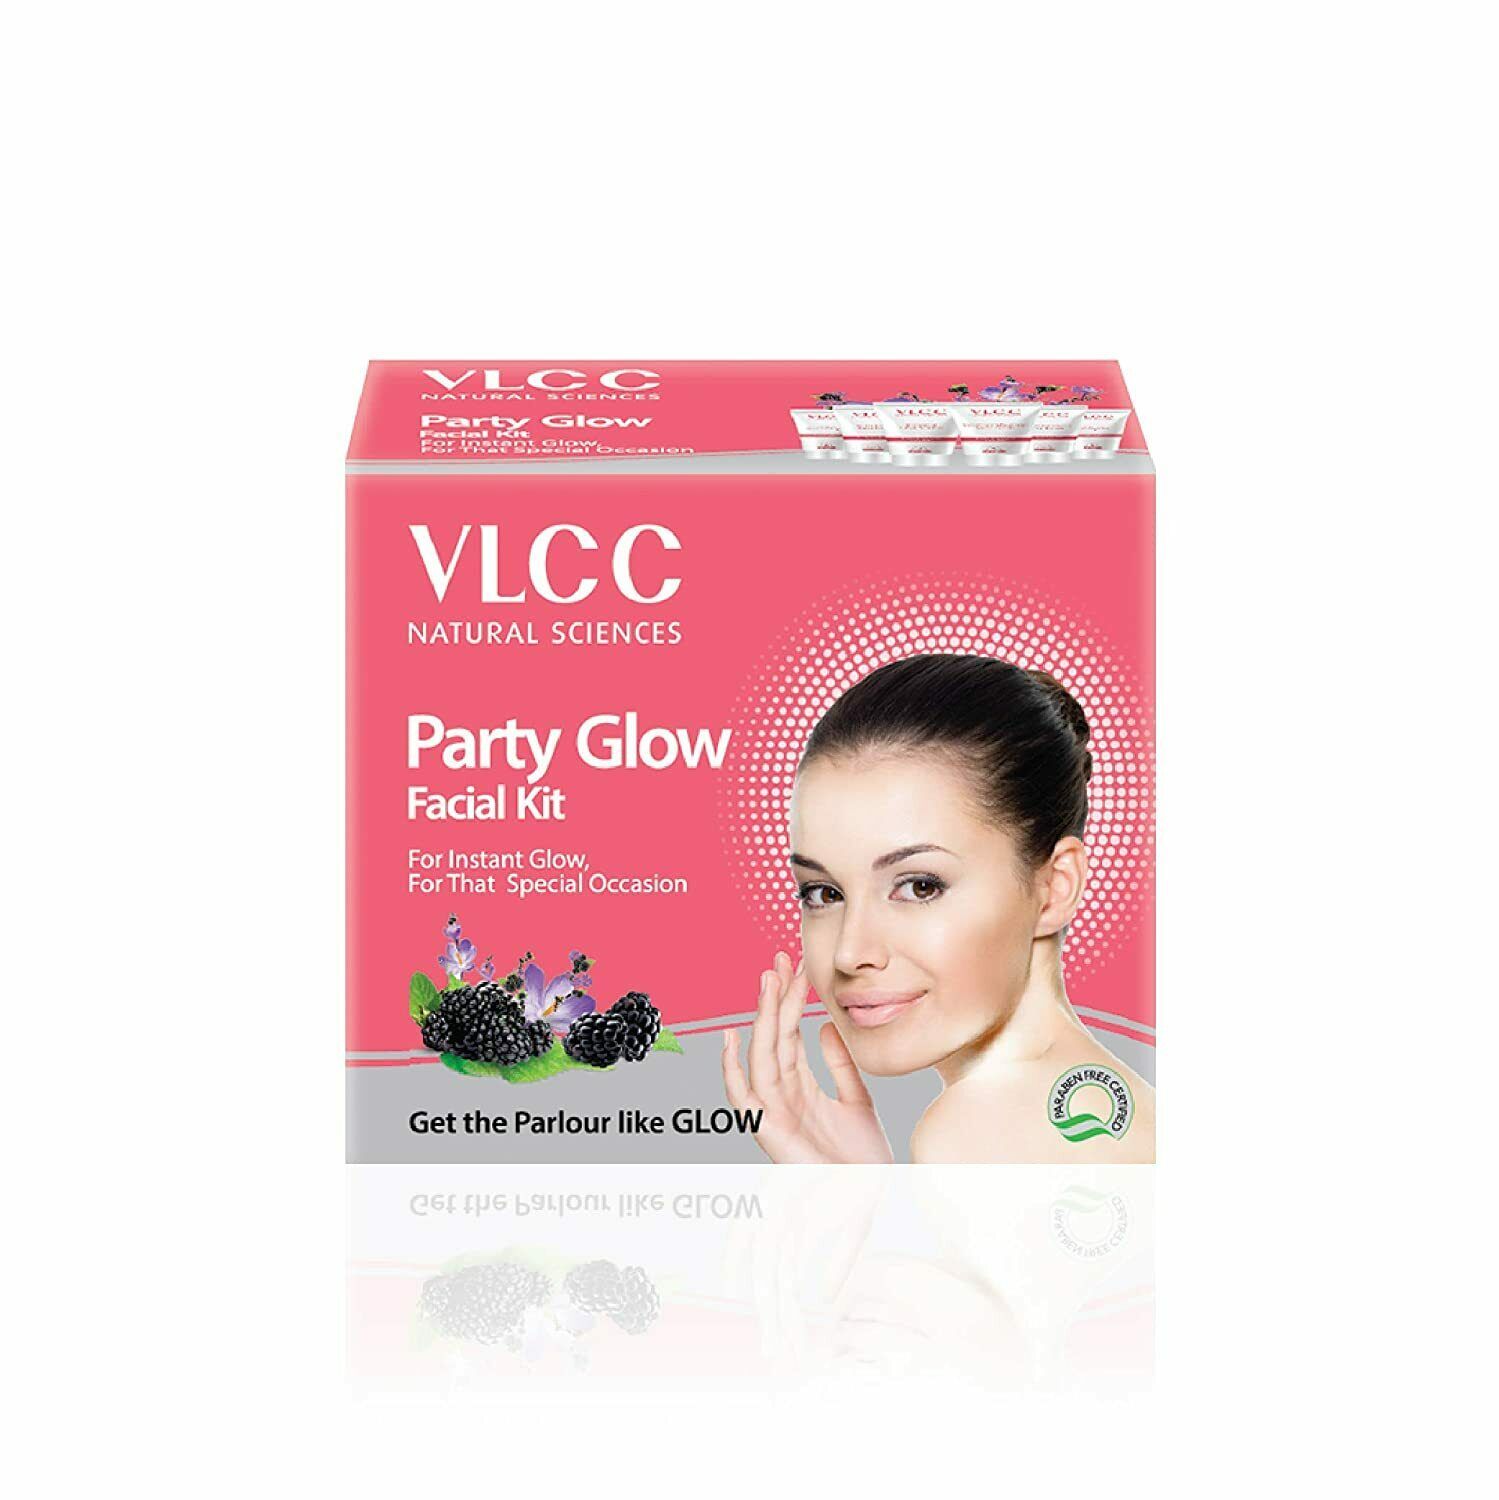 VLCC Party Glow Facial Kit, 60g - $13.98